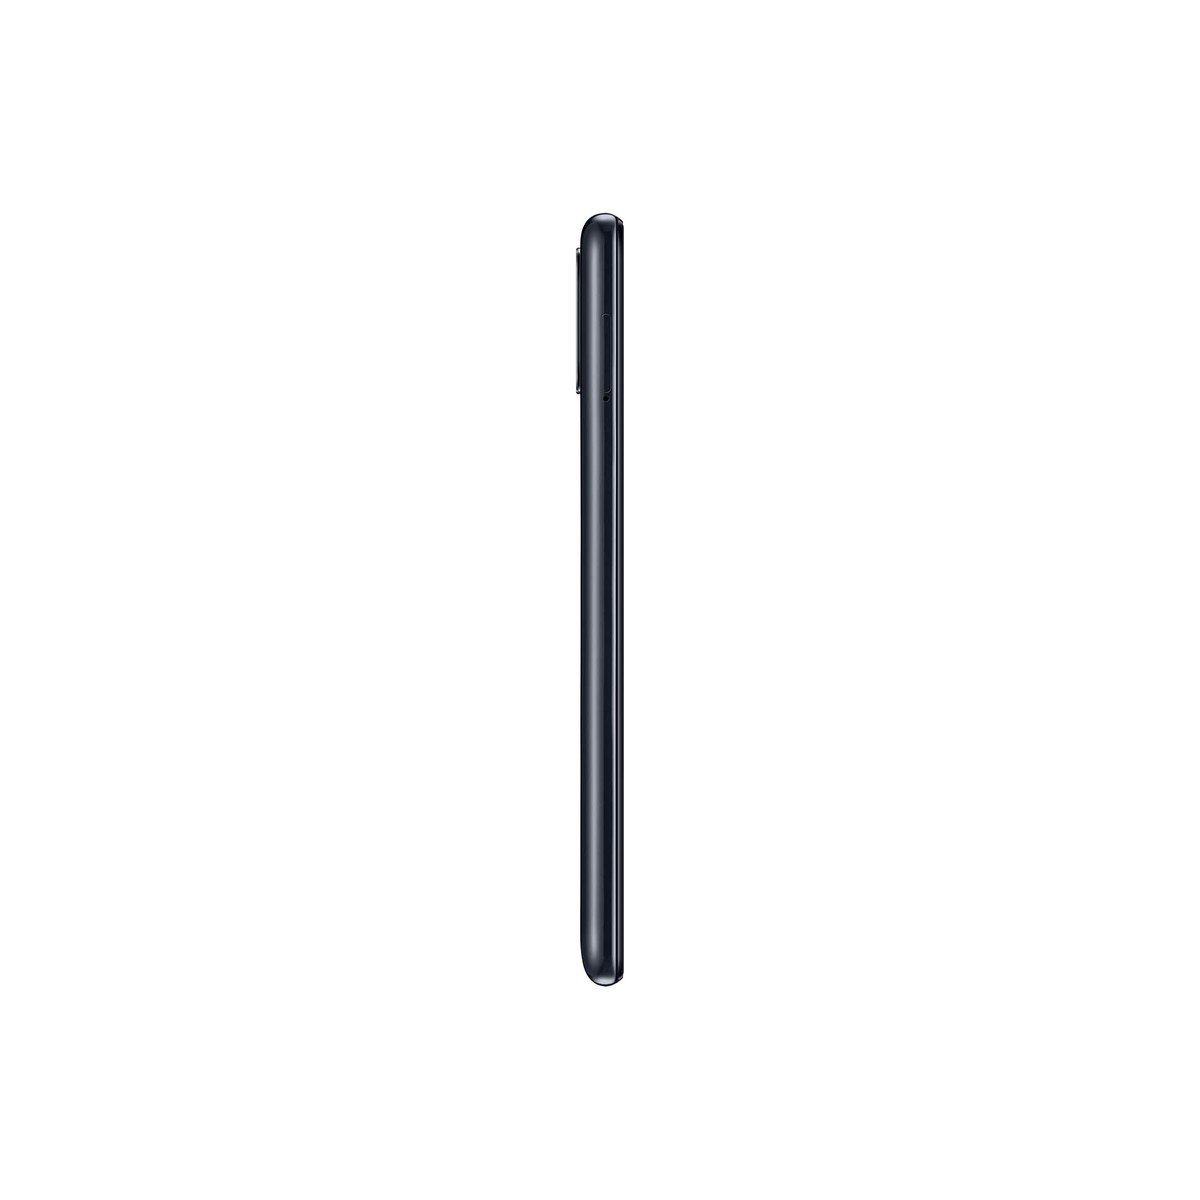 Samsung Galaxy M31 (SM-315F/DSN) 128GB Black